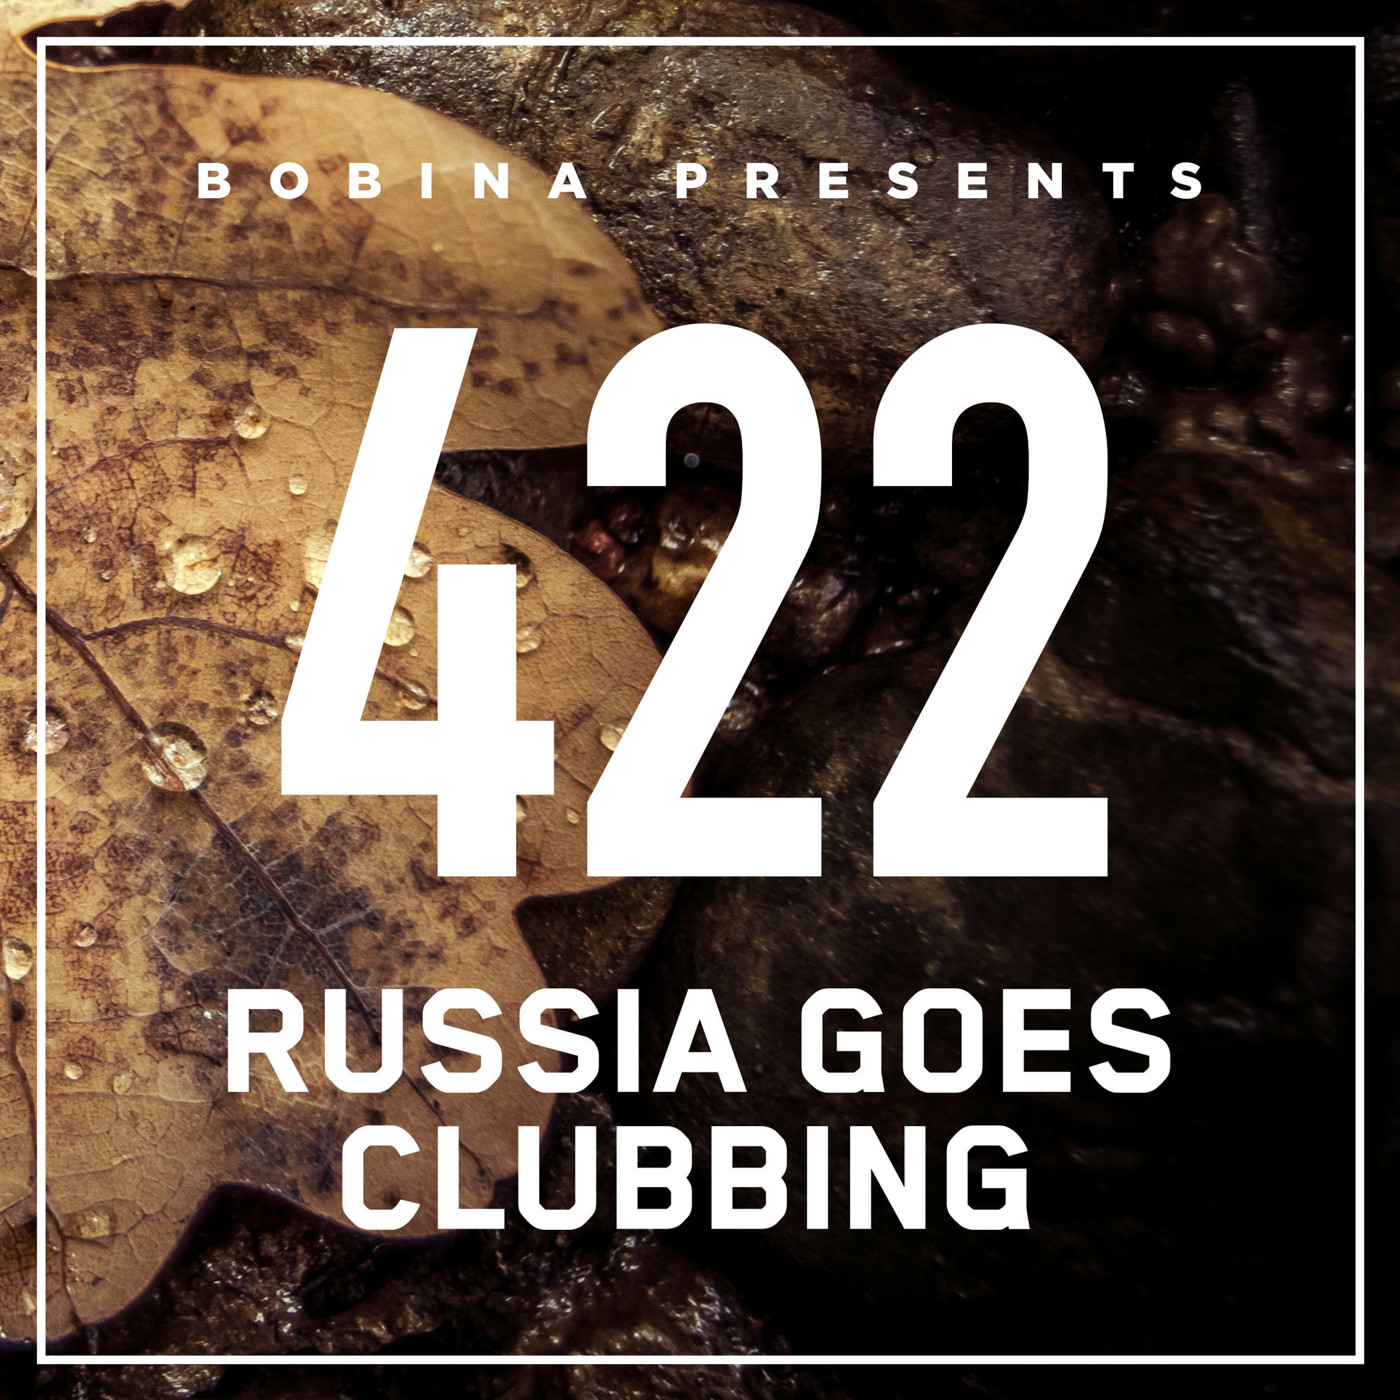 Bobina - Nr. 422 Russia Goes Clubbing (Rus)